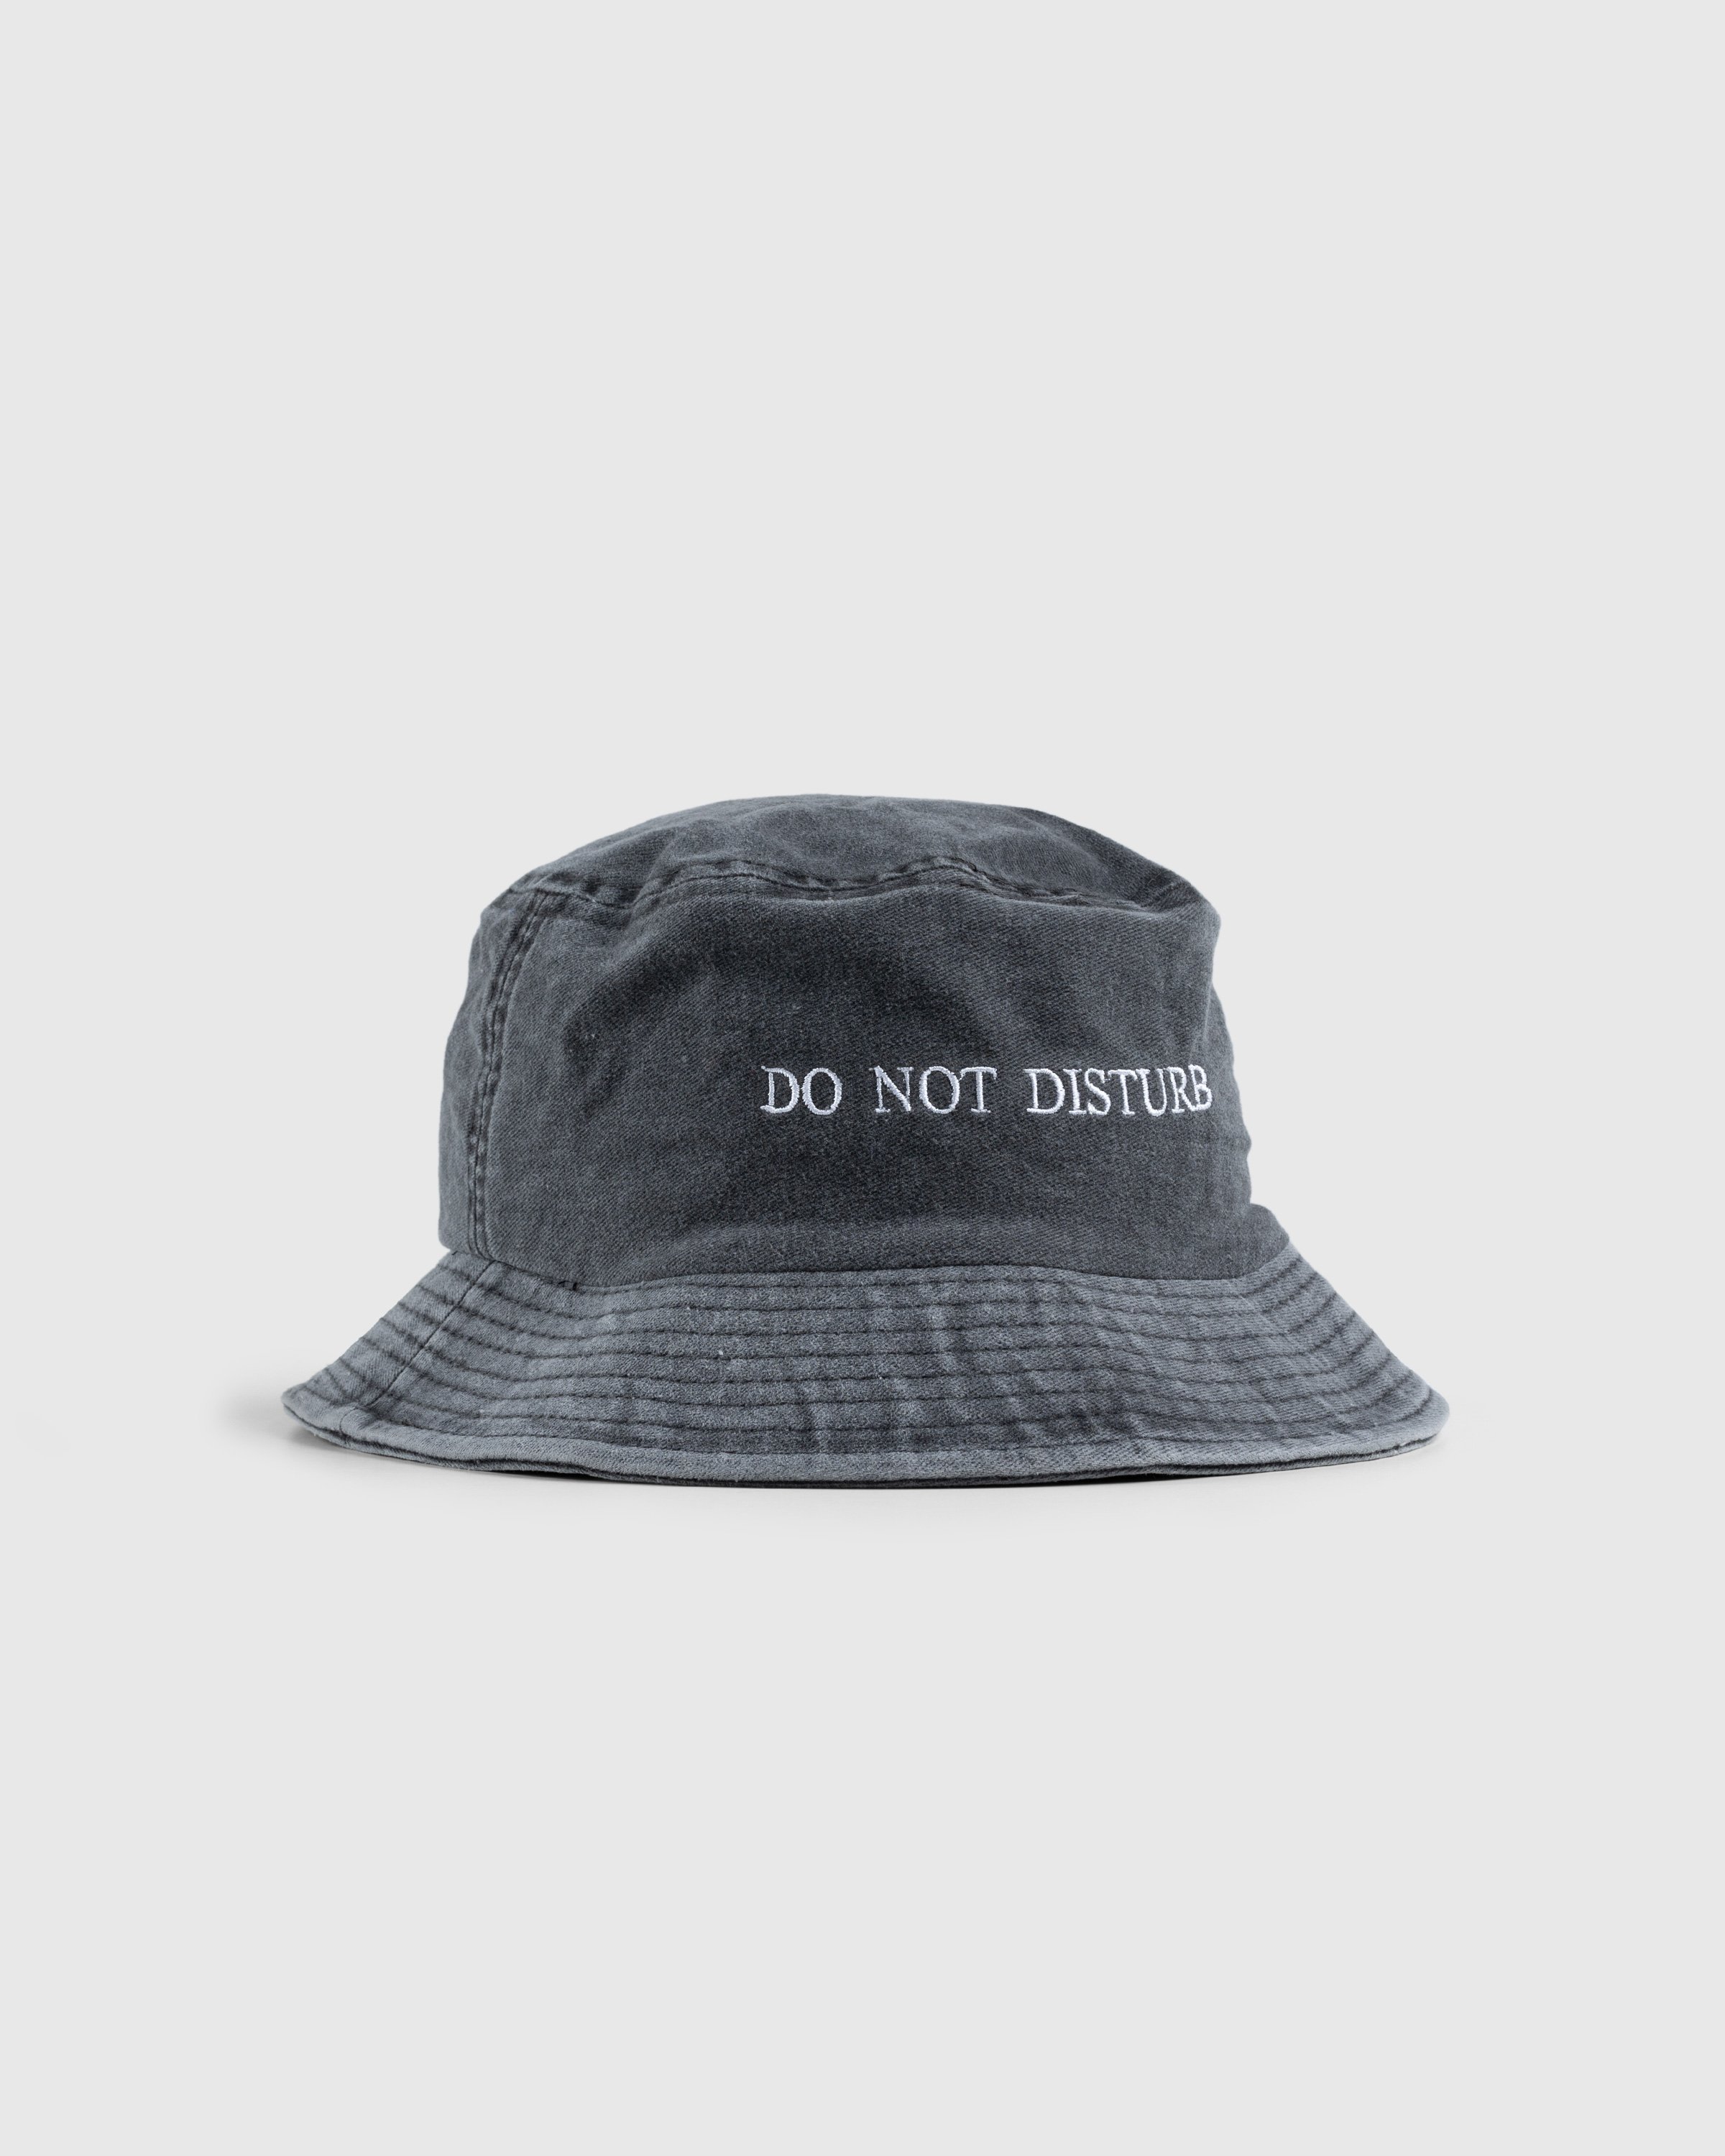 HO HO COCO - Do Not Disturb Bucket Hat Black - Hats - Black - Image 1